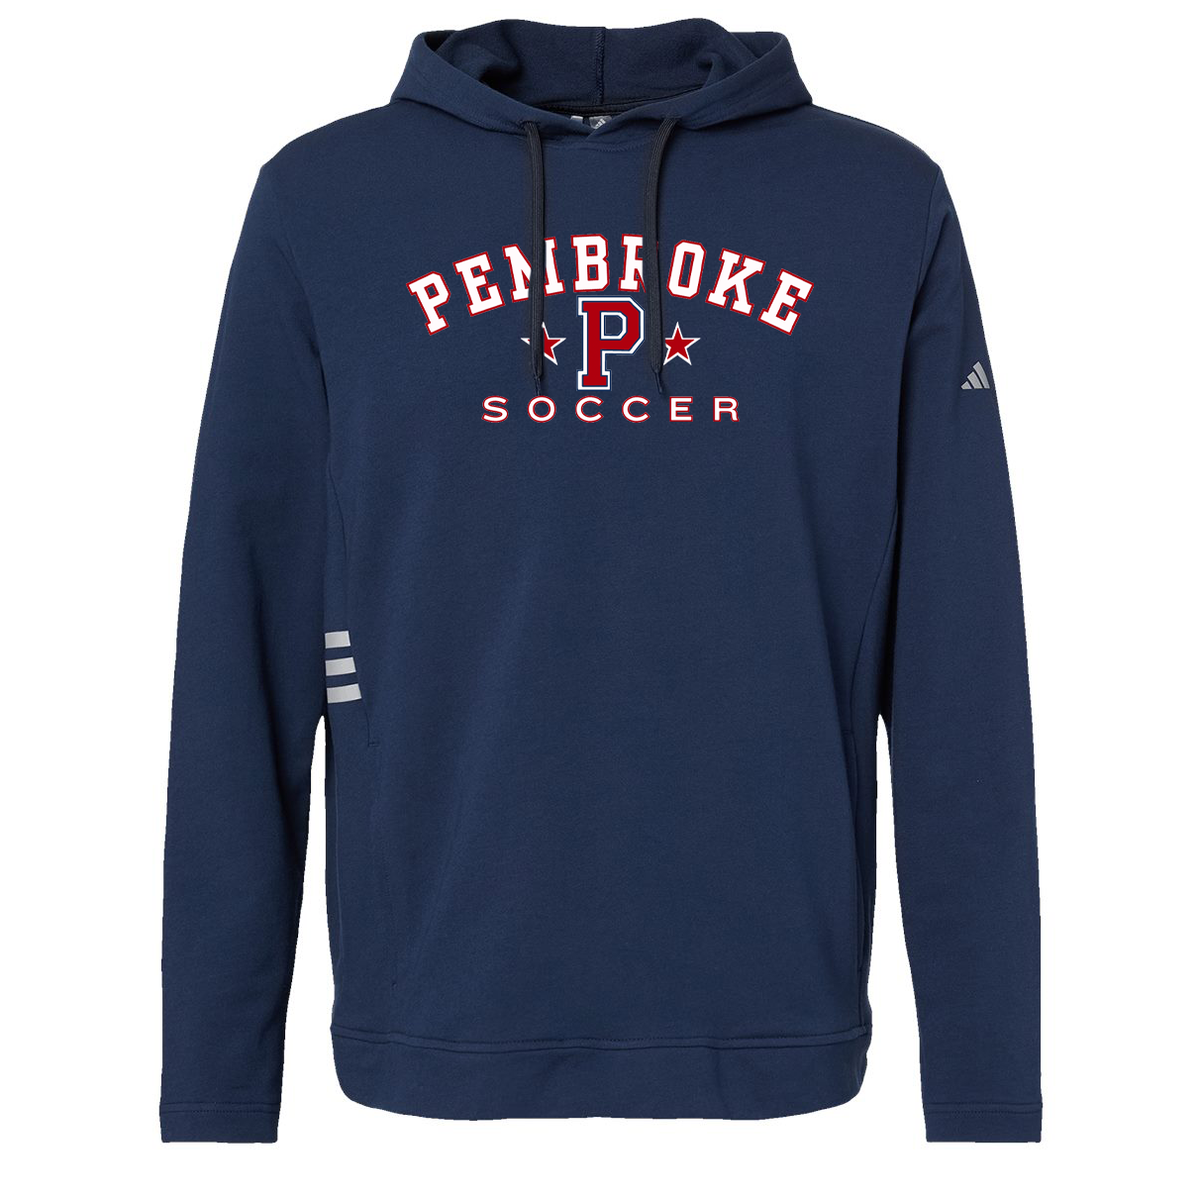 Pembroke Soccer Adidas Lightweight Sweatshirt